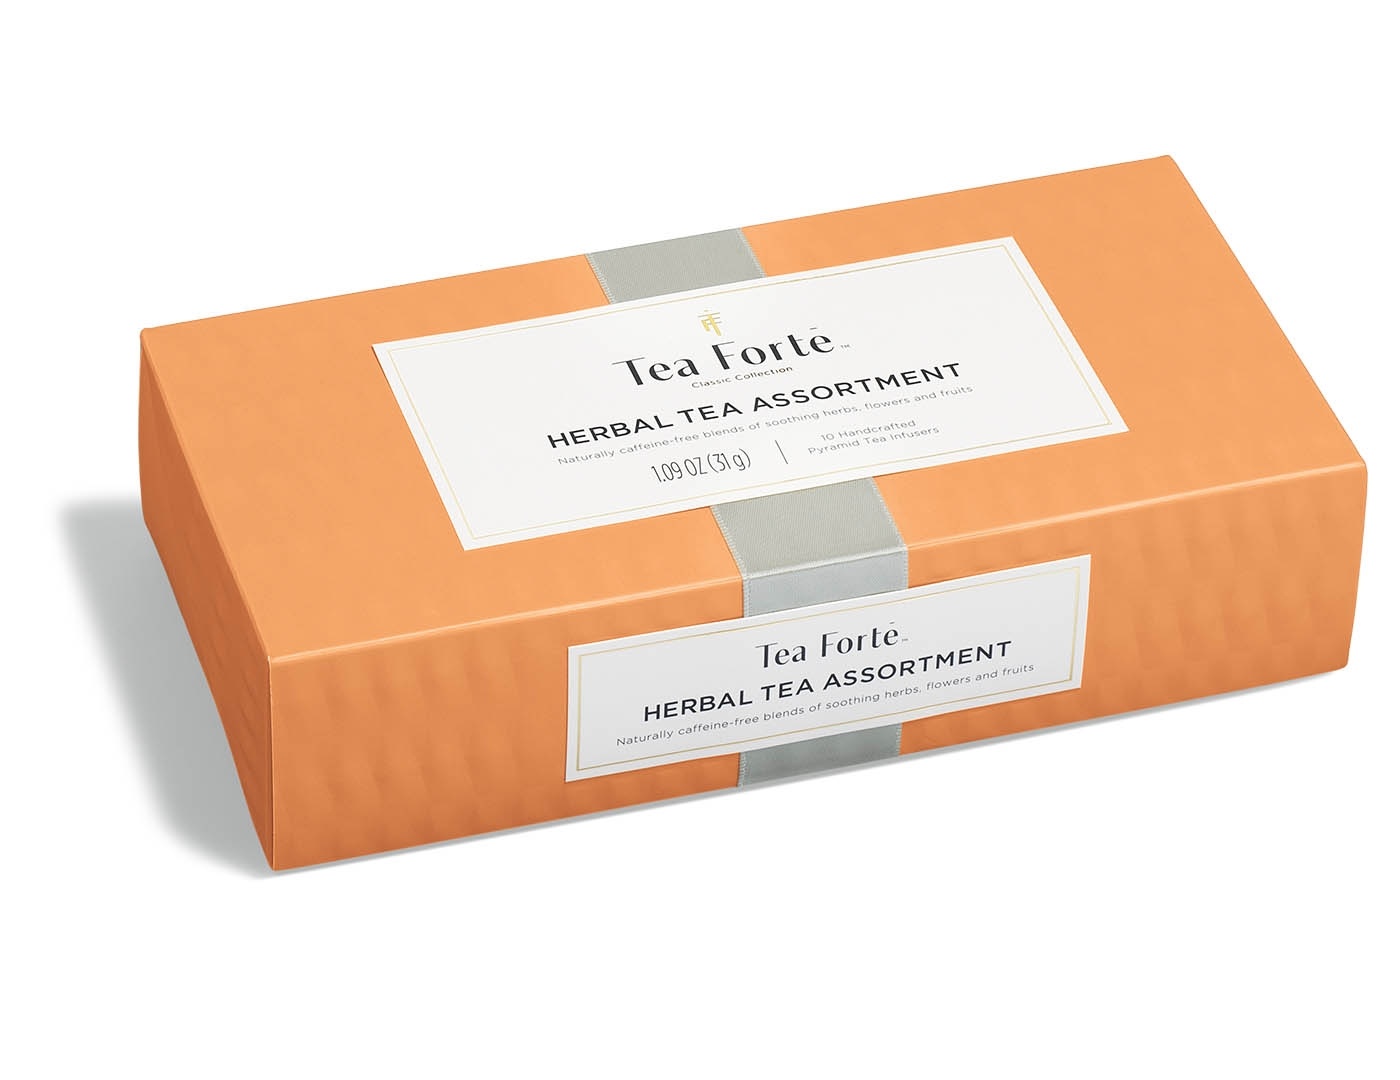 Tea forte Herbal Tea Assortment Petite Presentation Box